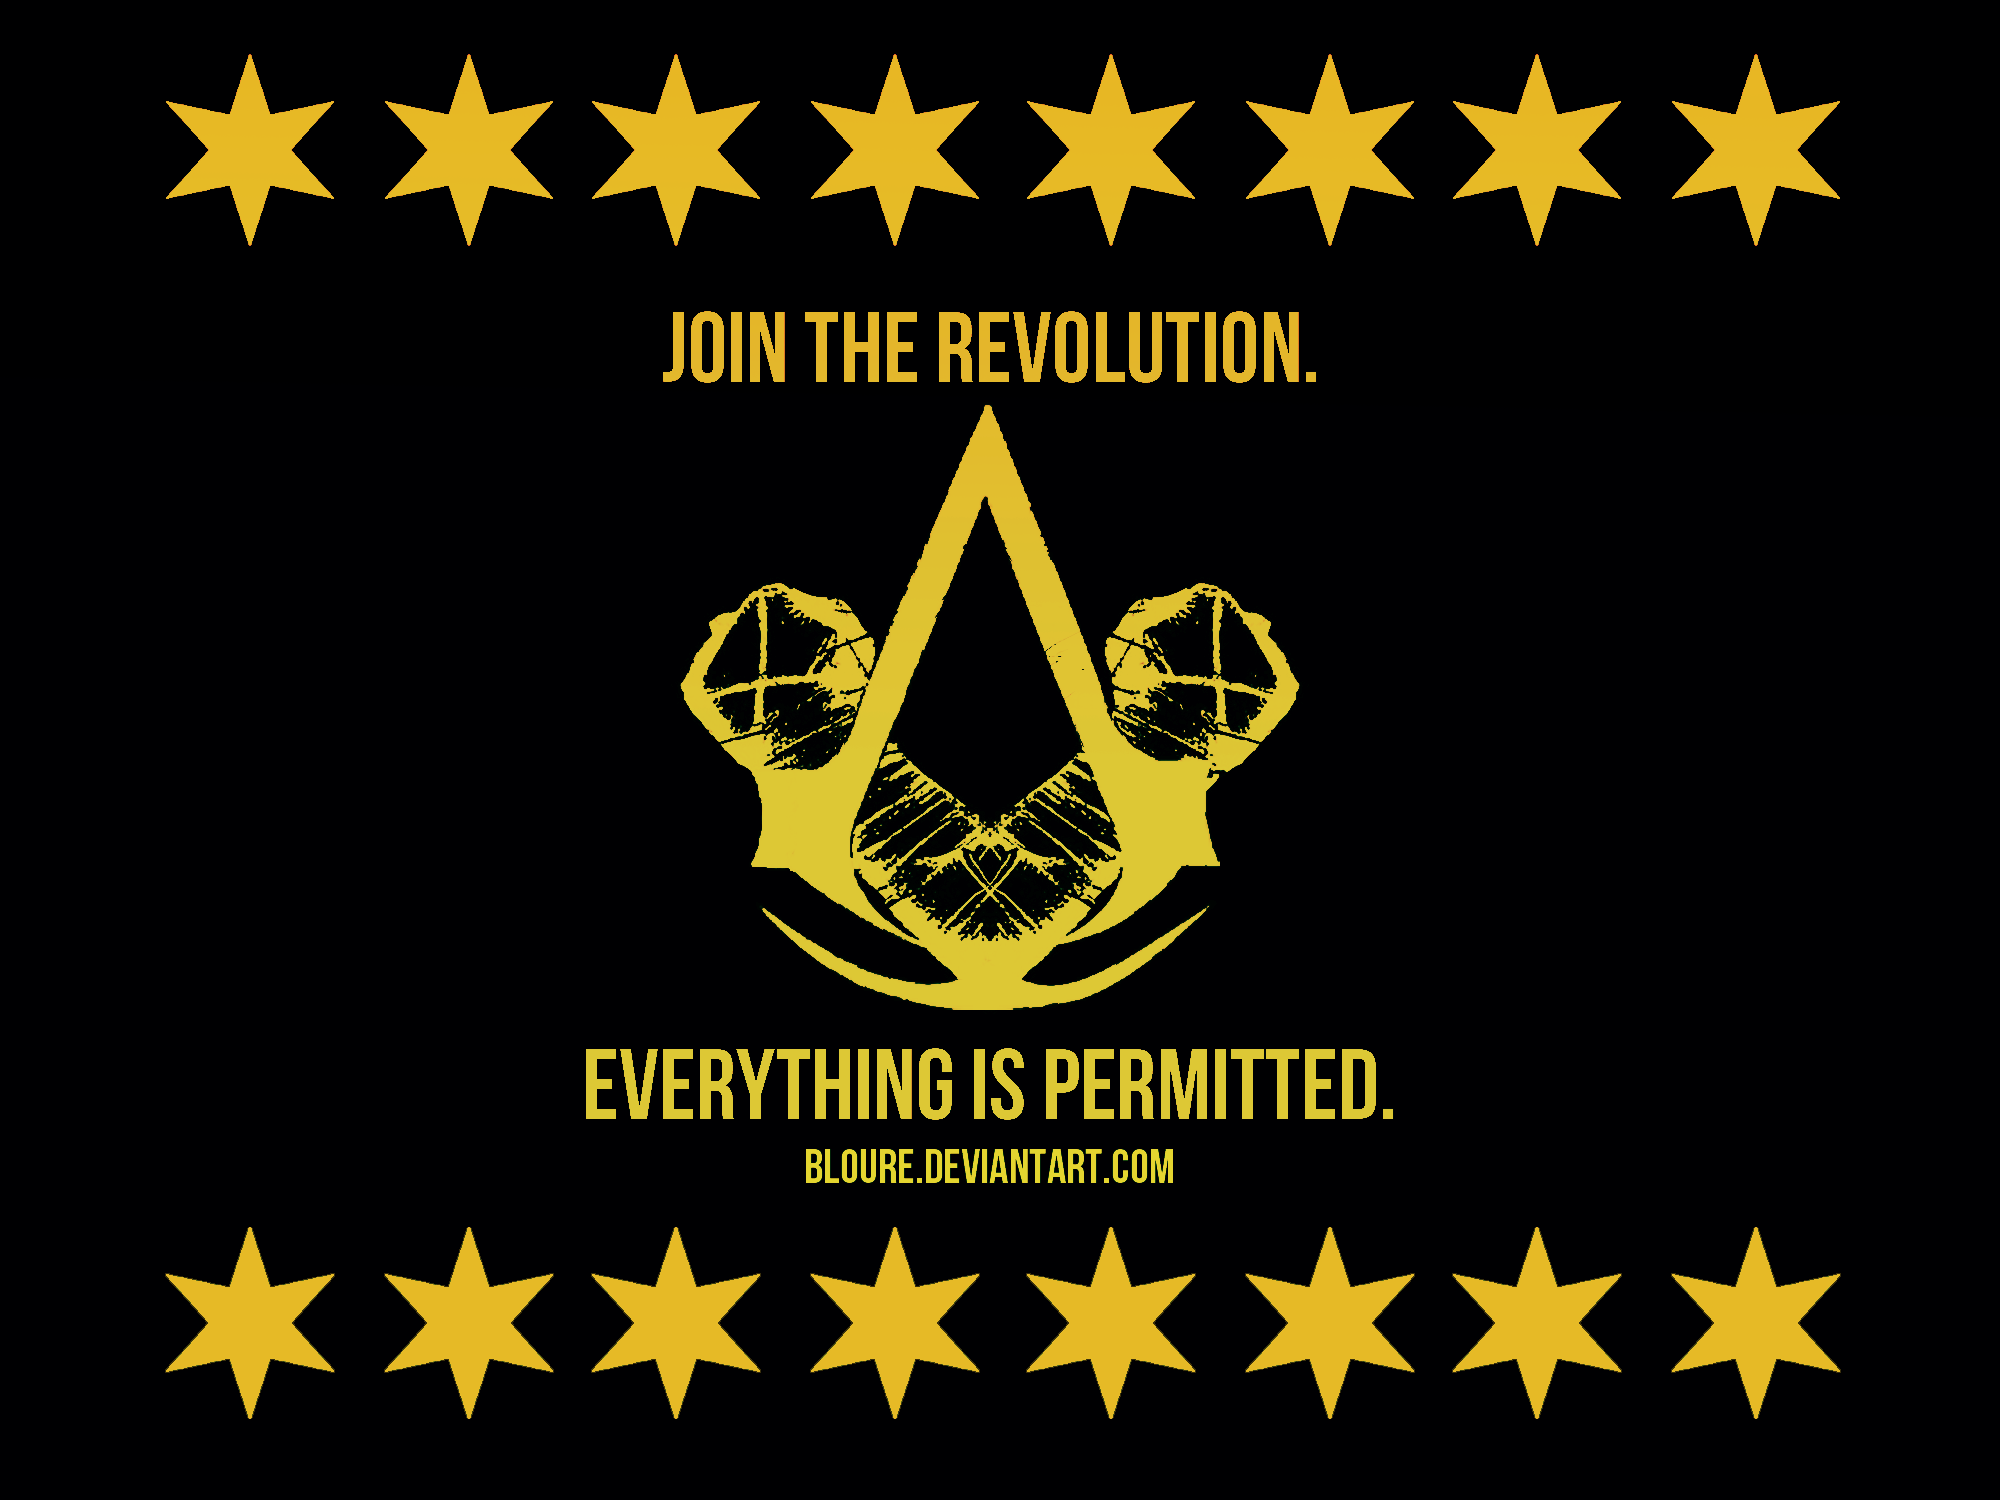 Assassin's Creed/CM Punk Wallpaper by bloure on DeviantArt